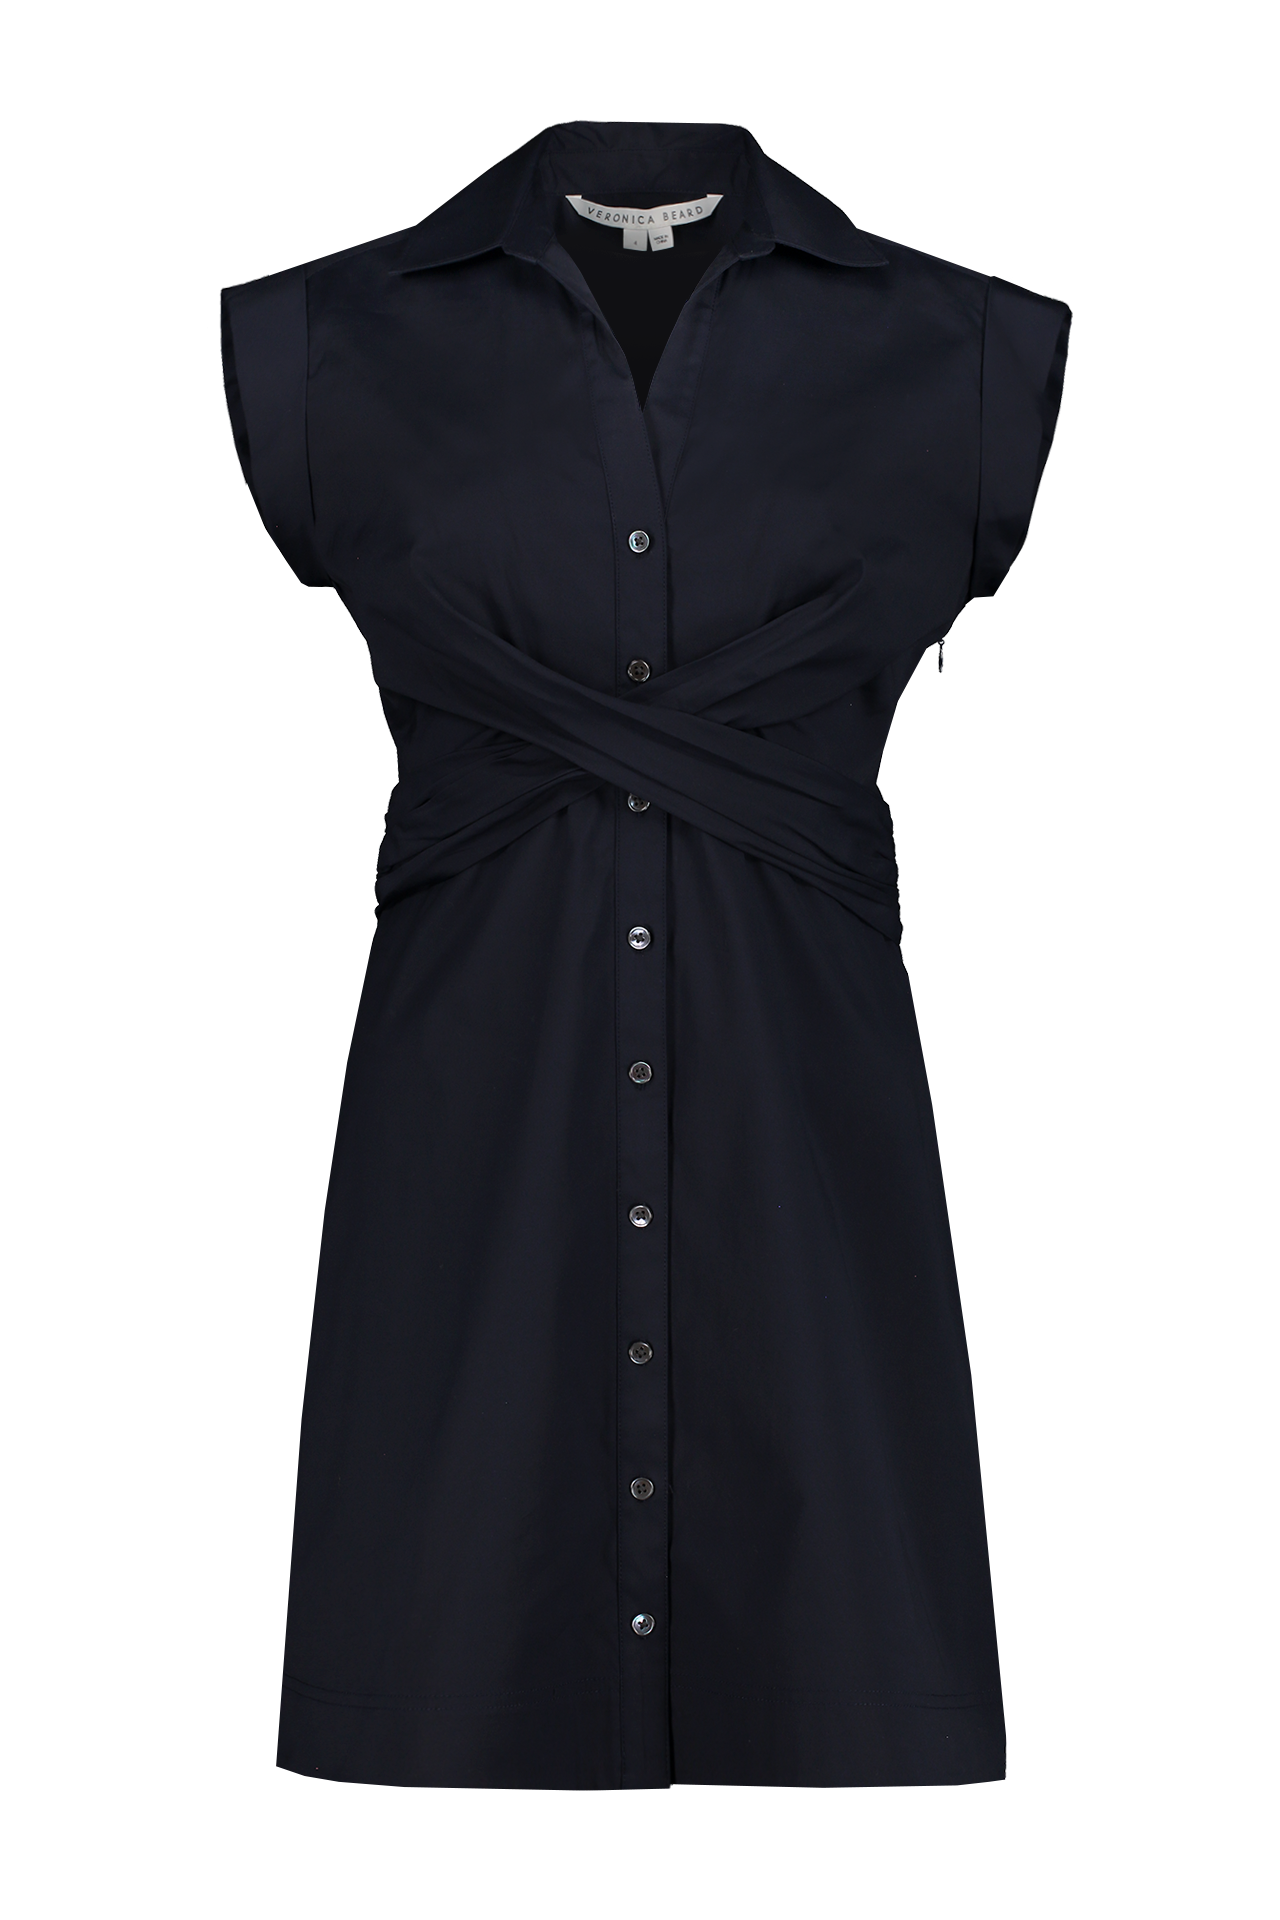 Veronica Beard Women's Nagano Dress | A.K. Rikk's